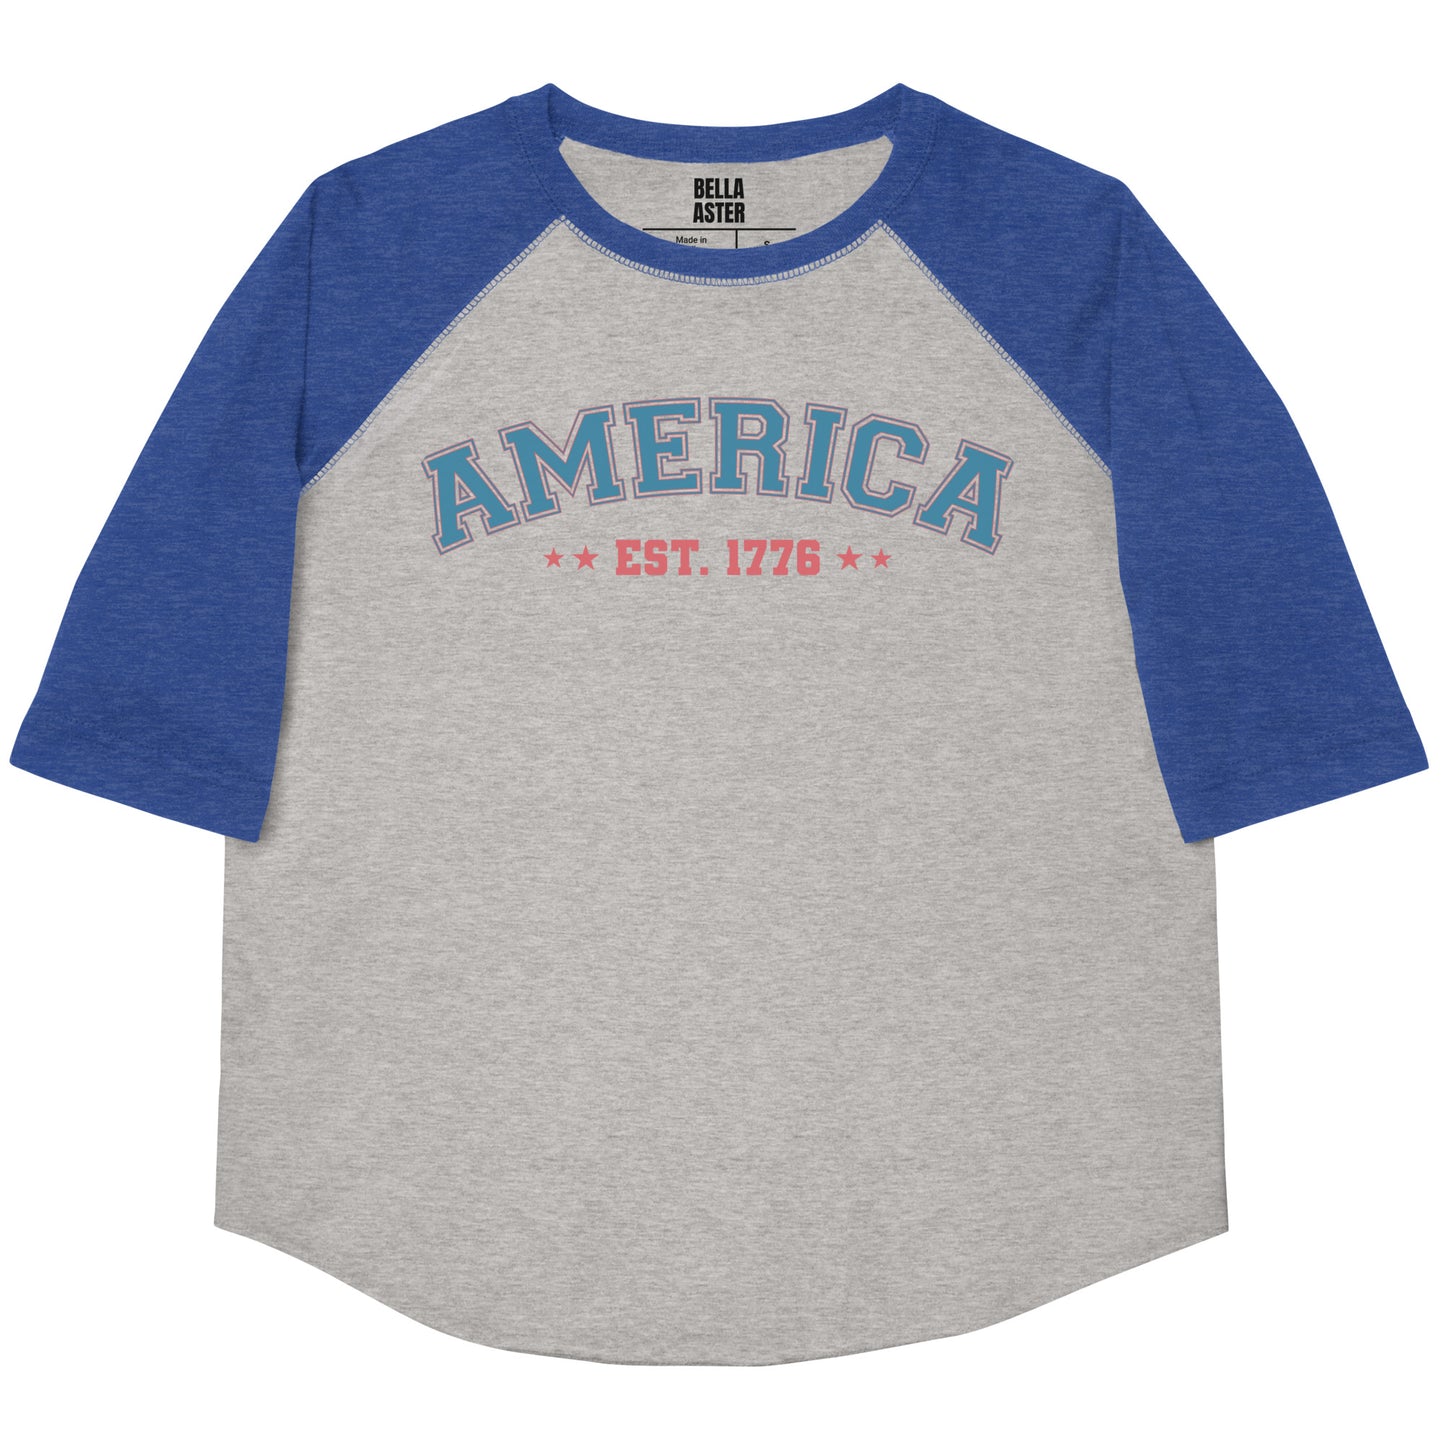 America Est. 1776 Youth Baseball Shirt